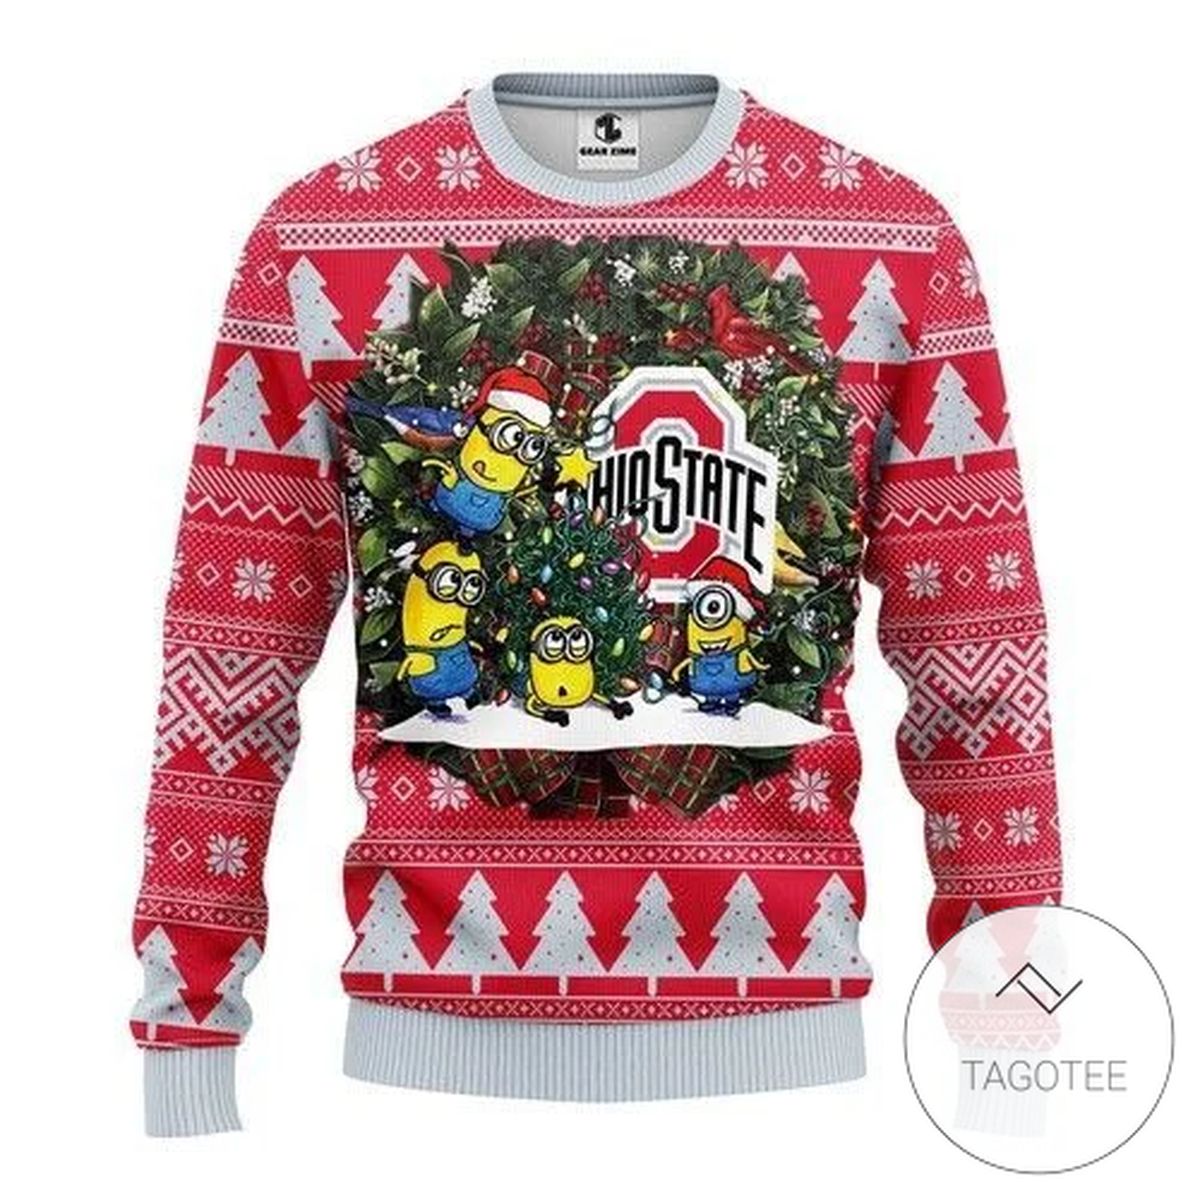 Ncaa Ohio State Buckeyes Minion Sweatshirt Knitted Ugly Christmas Sweater